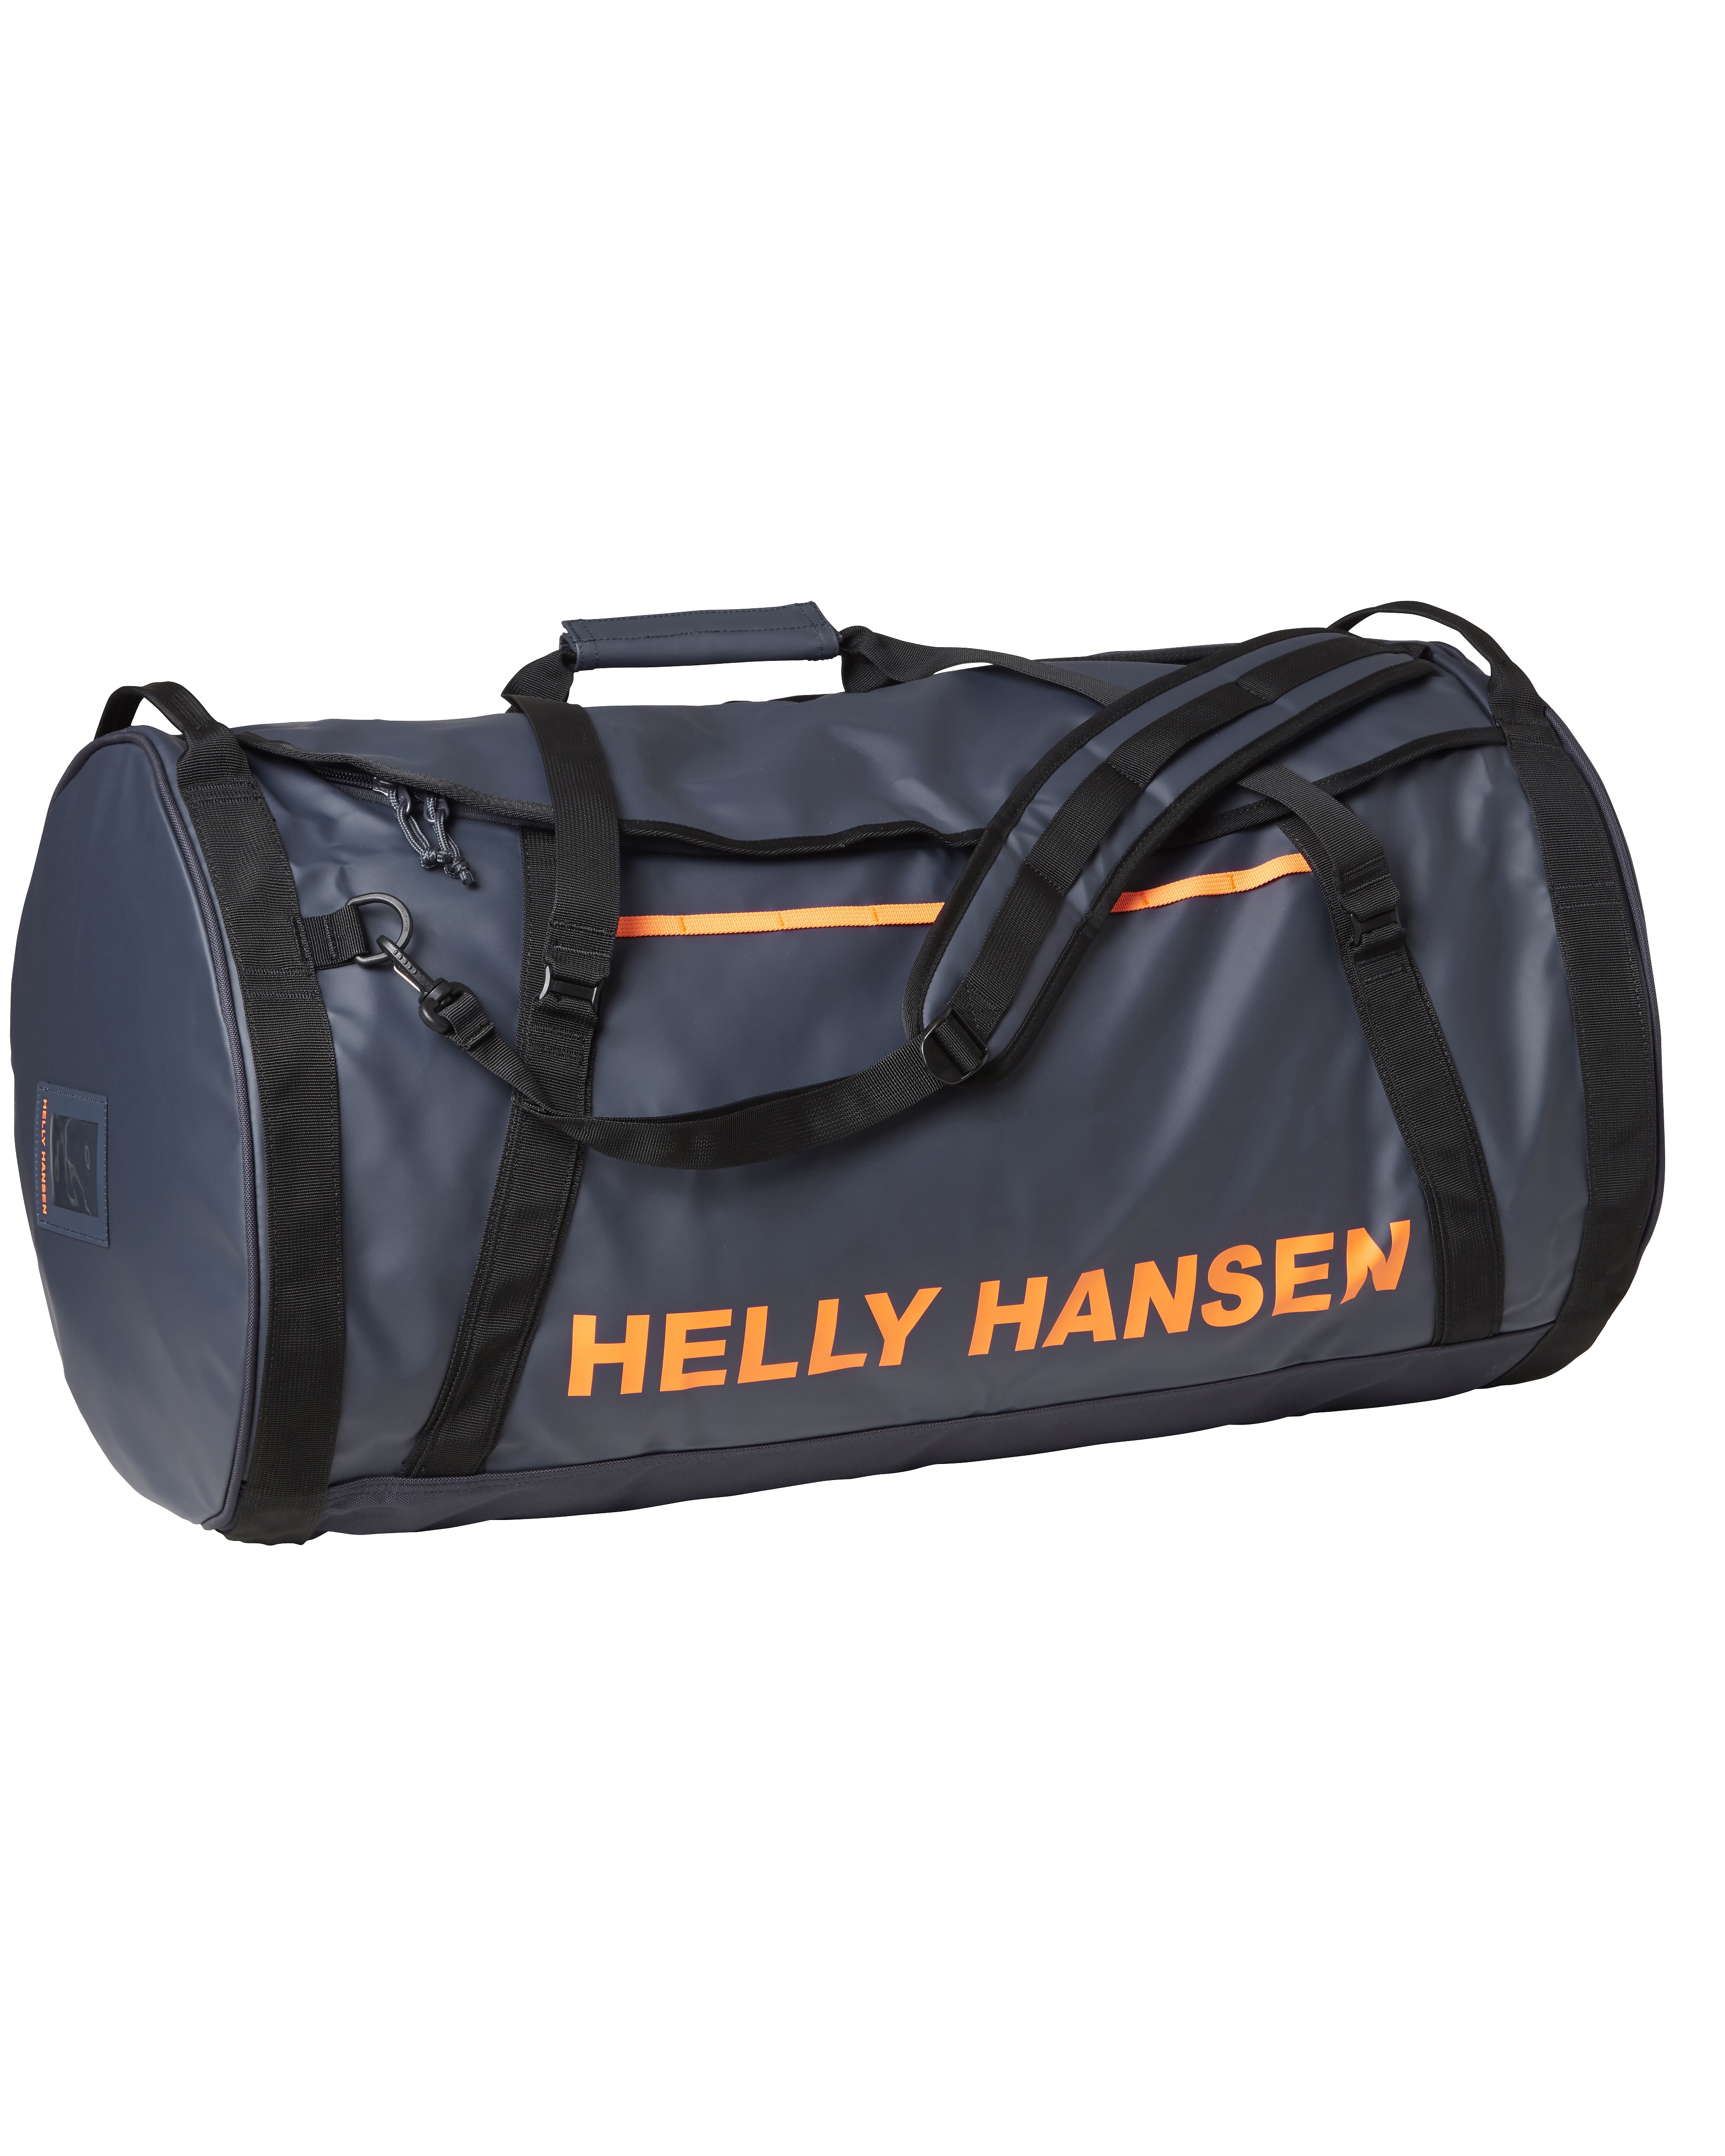 Helly Hansen Duffel Bag 2 90L - Graphite BL